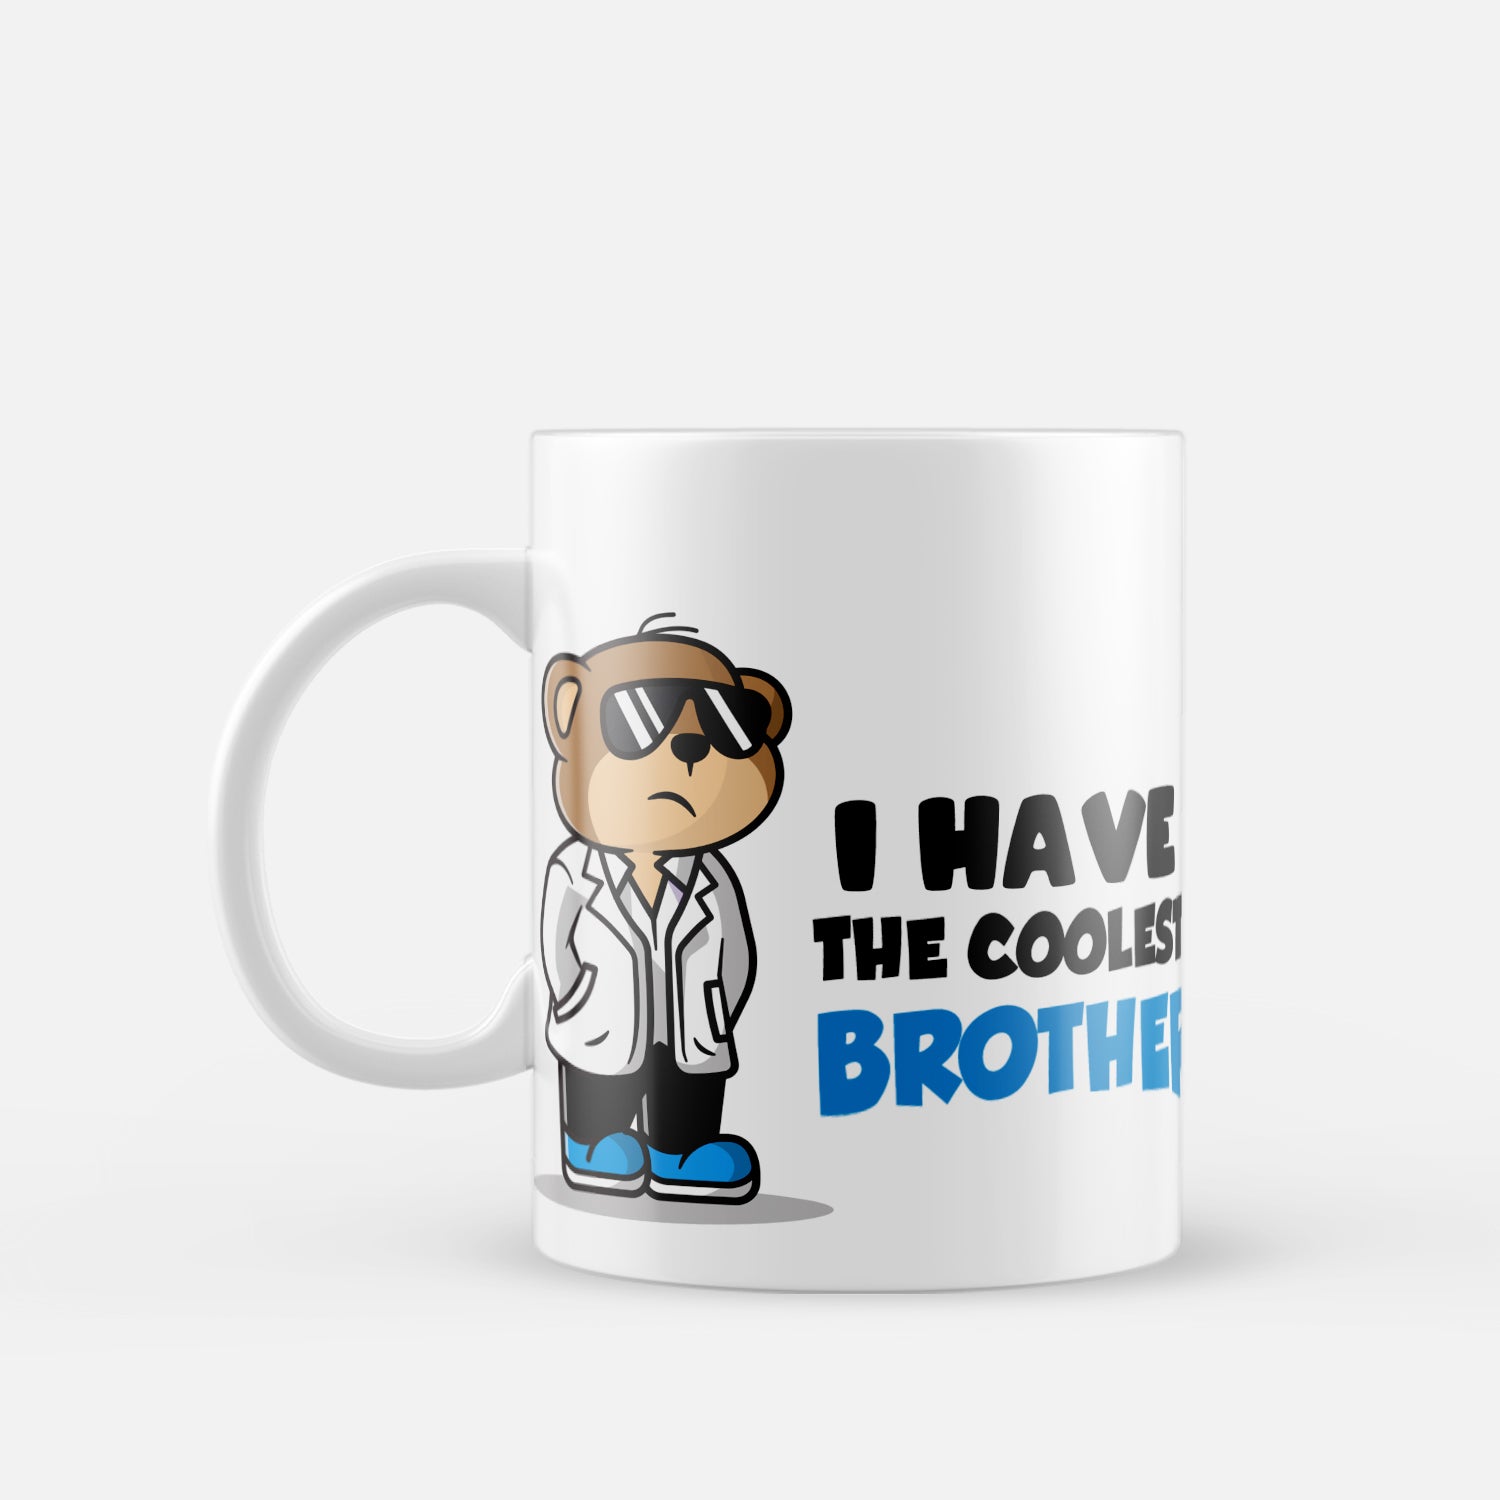 "I have Coolest Brother" Ceramic Coffee/Tea Mug 2